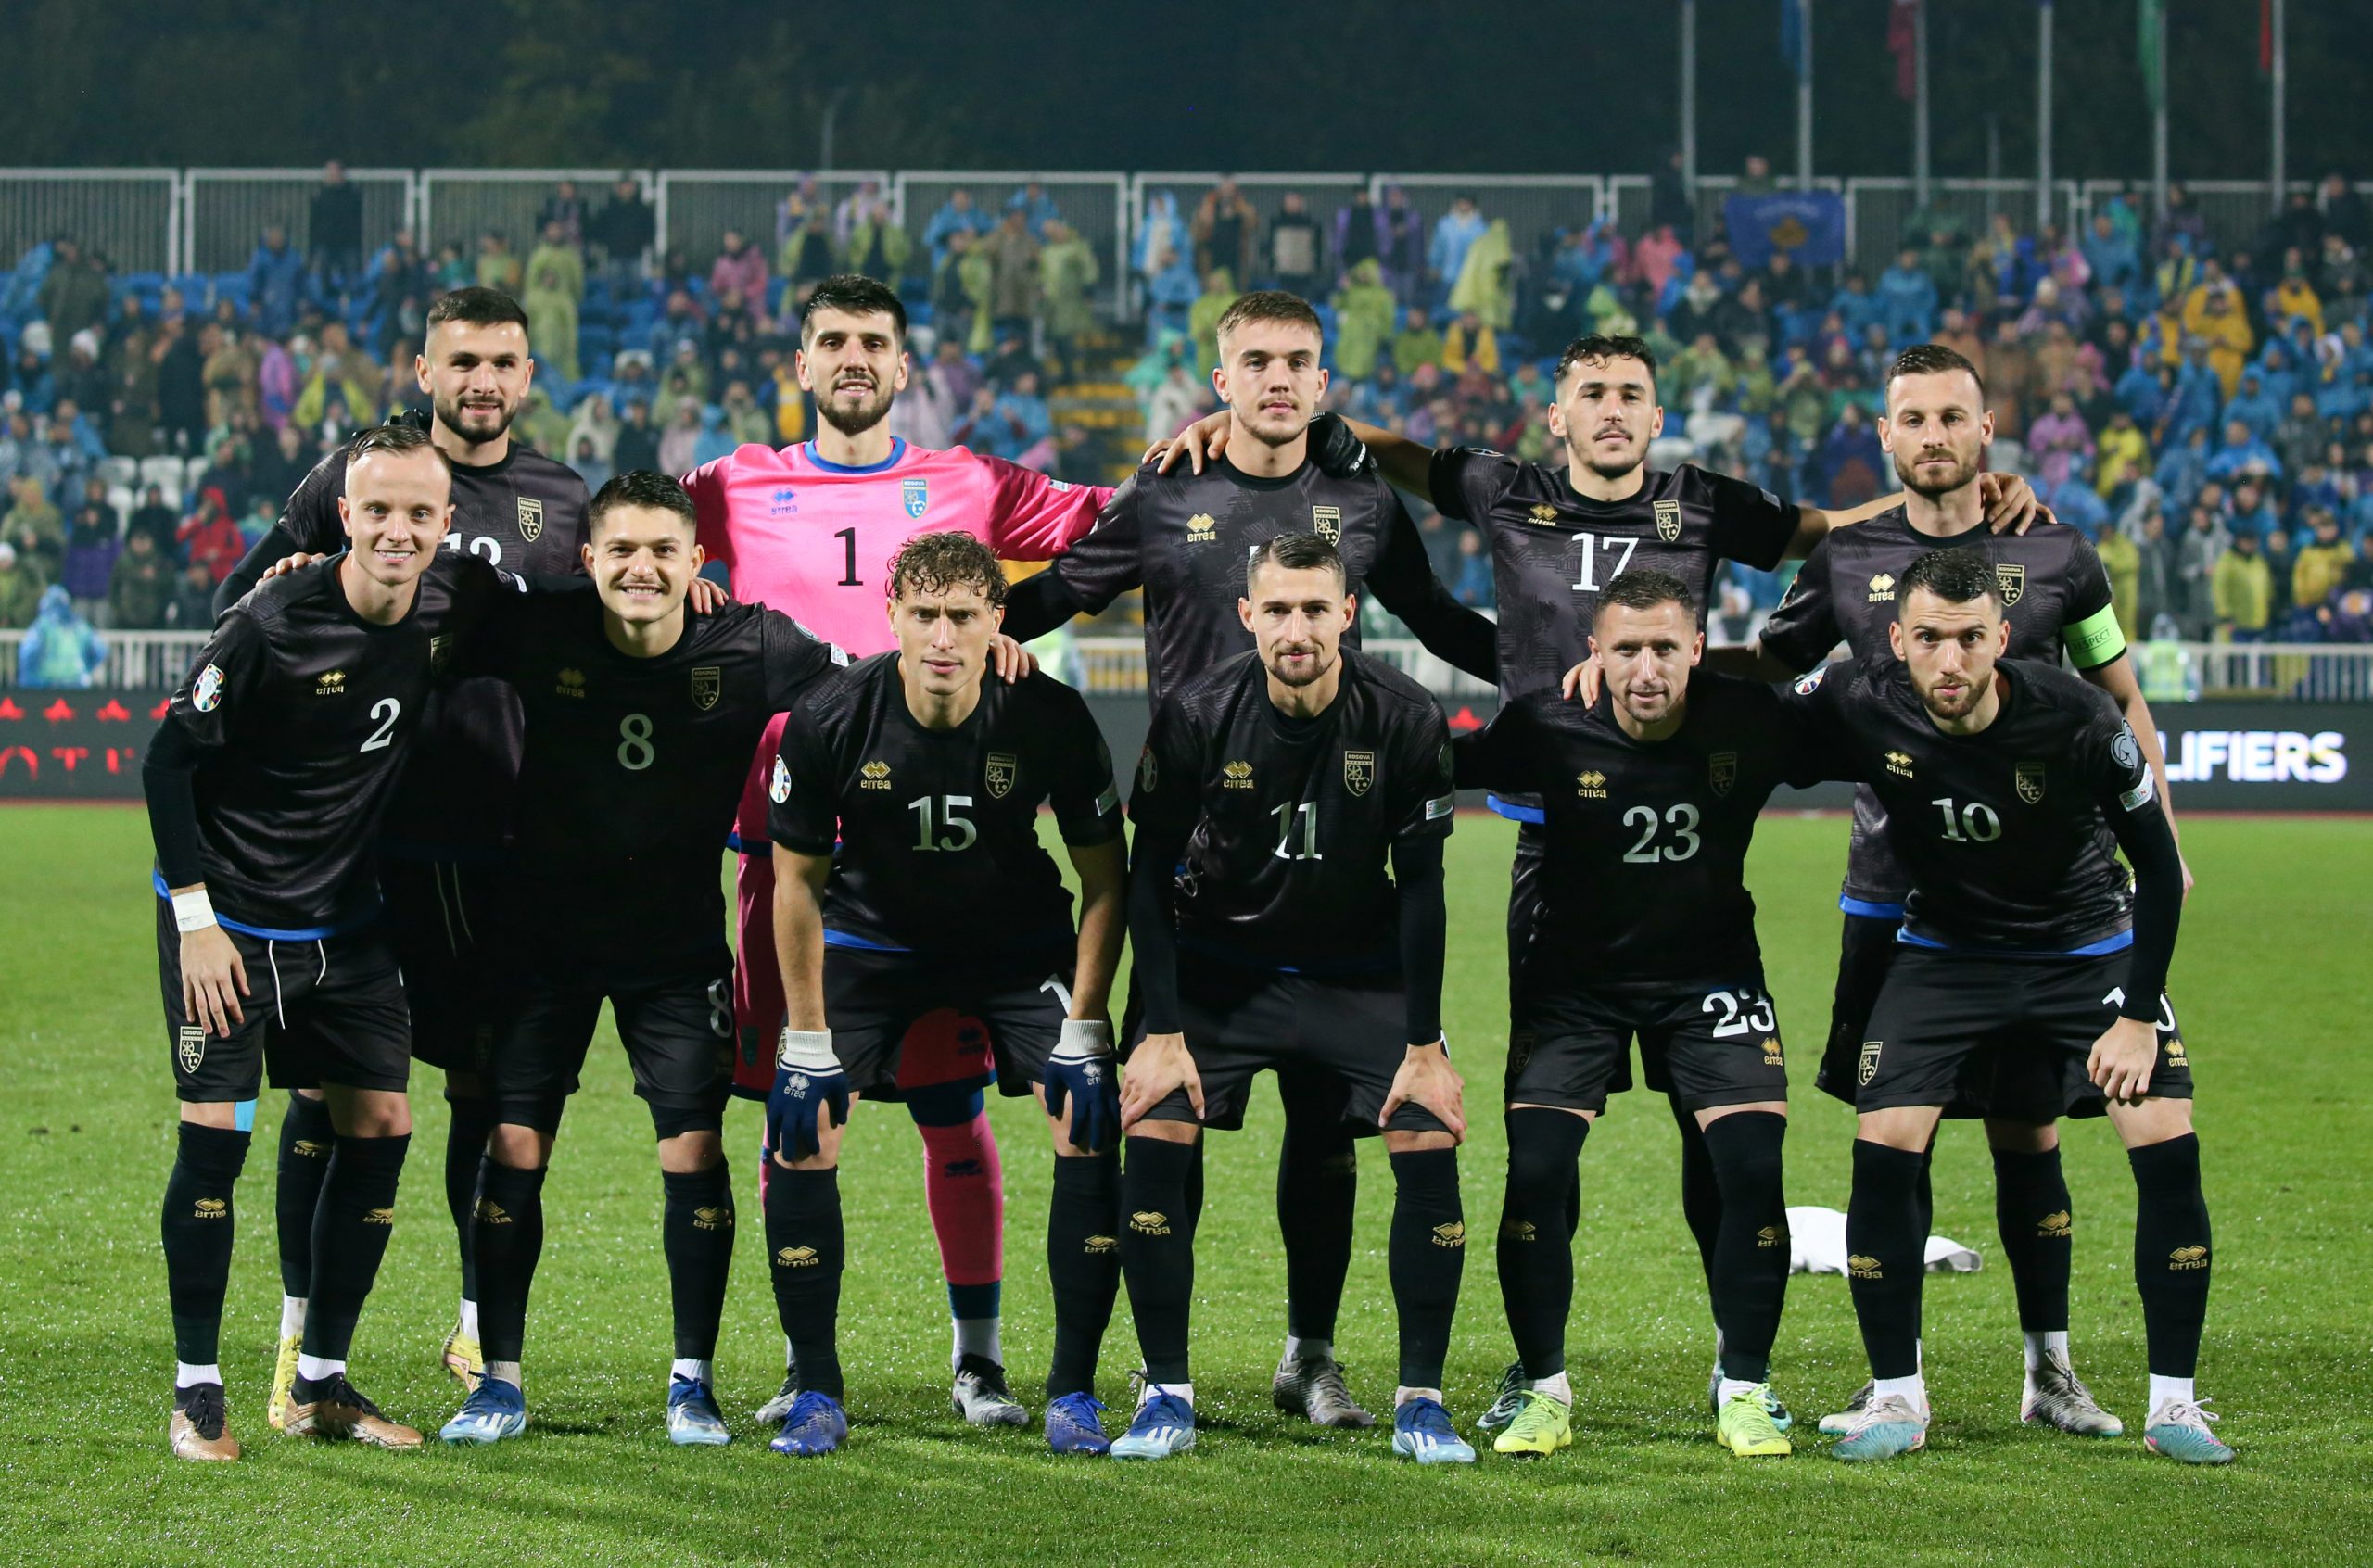 Kosova XI 